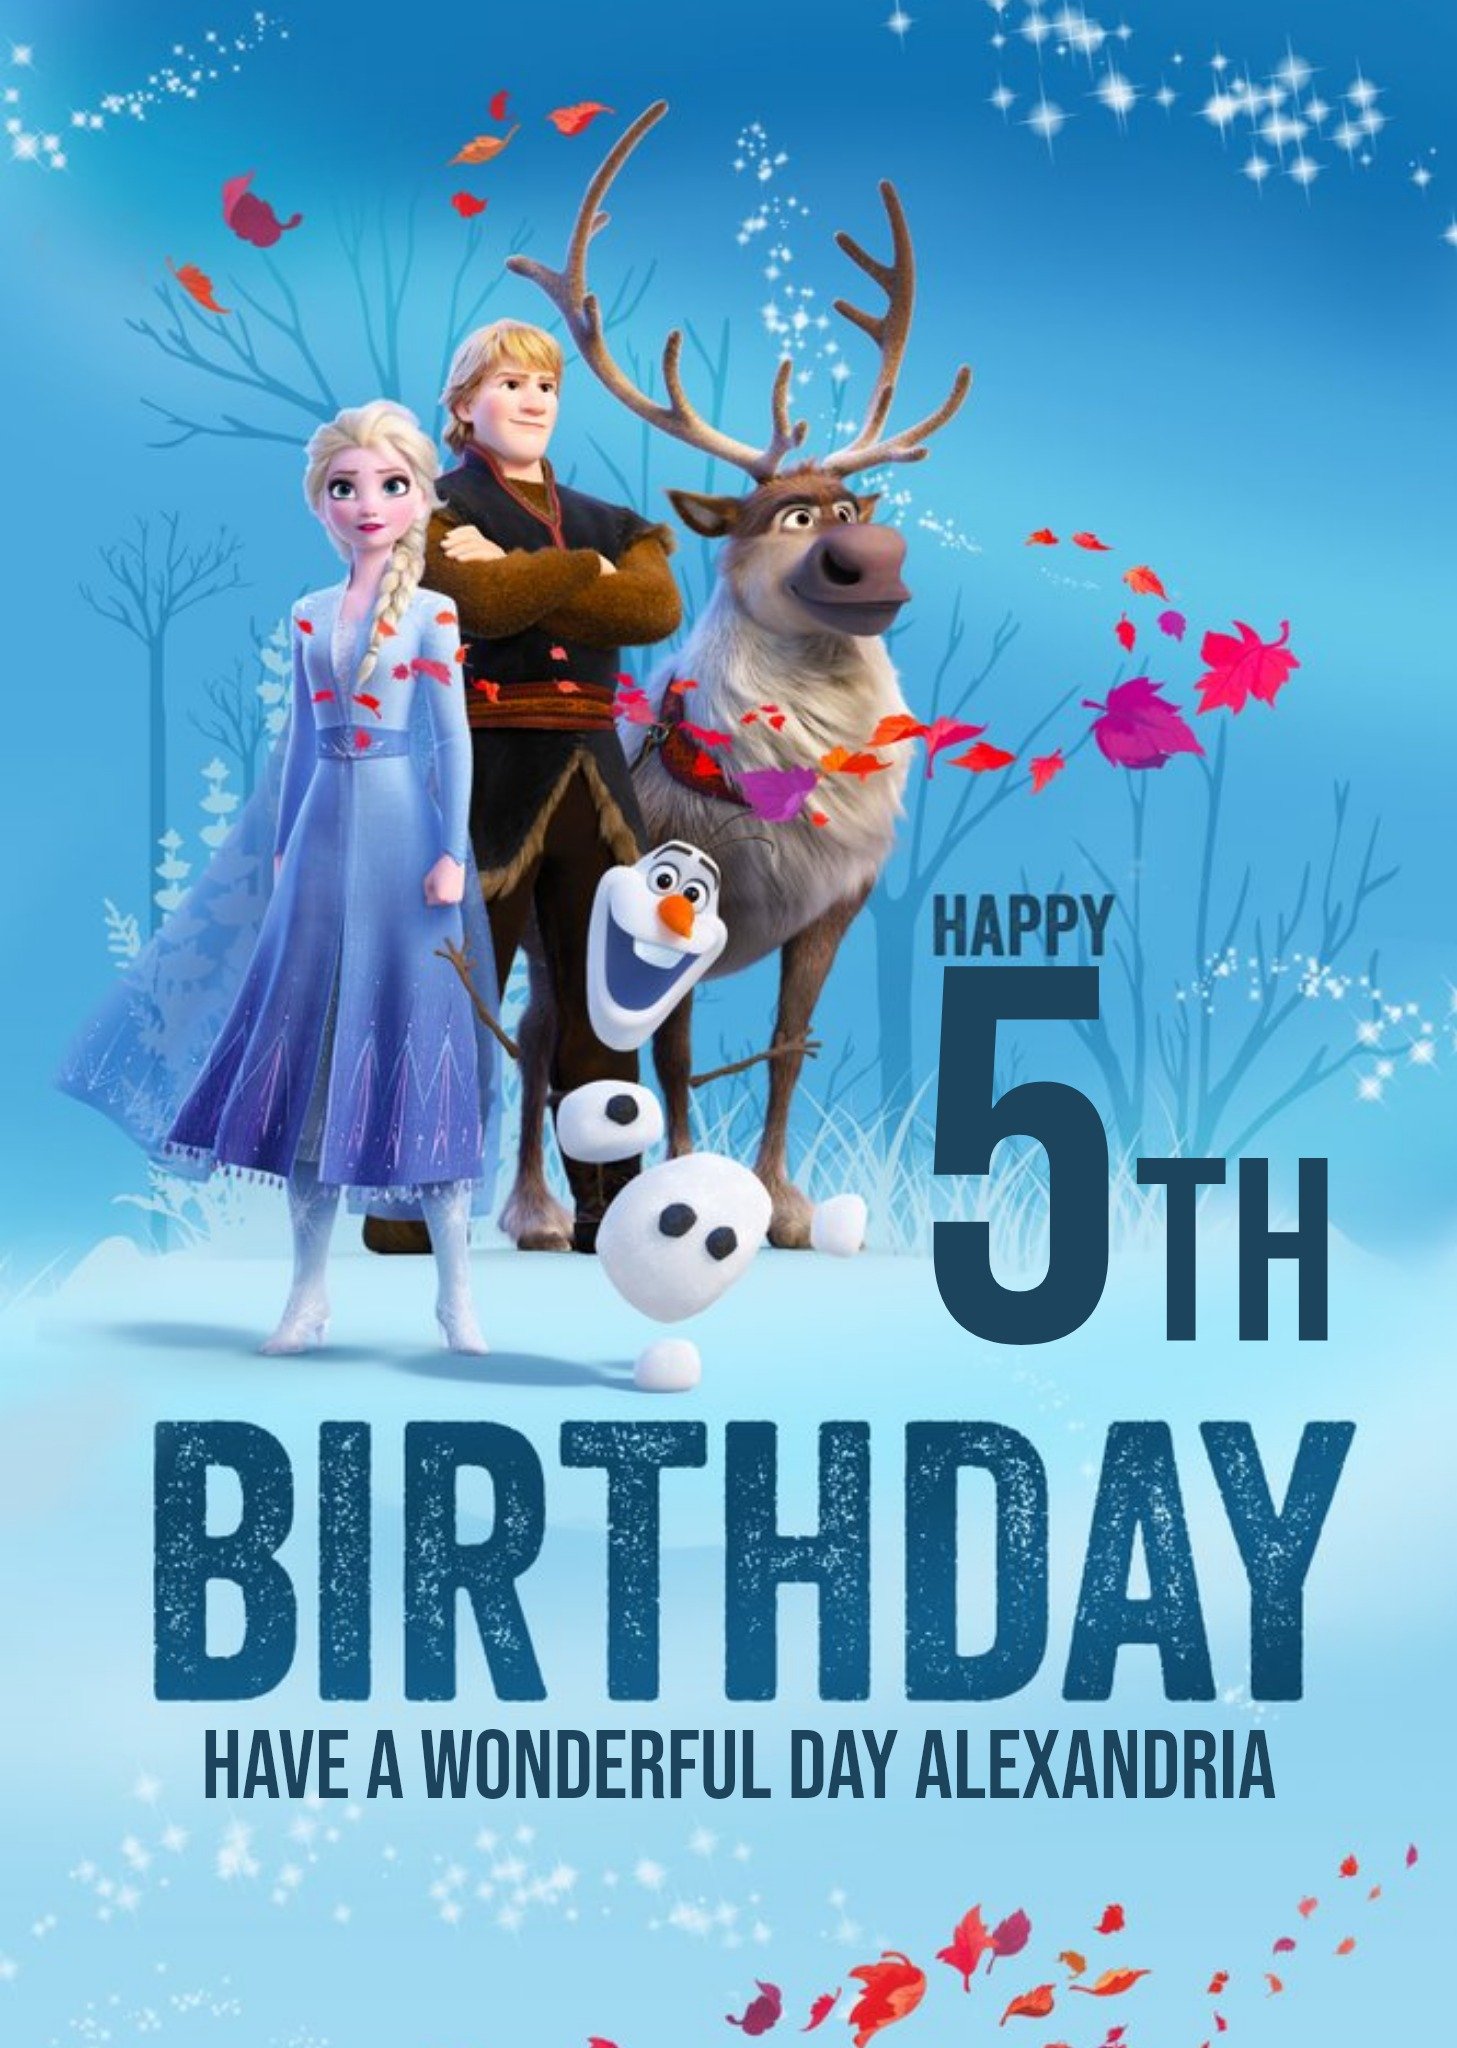 Disney Frozen 2 Elsa Anna Krist Sven Olaf 5th Birthday Card Ecard